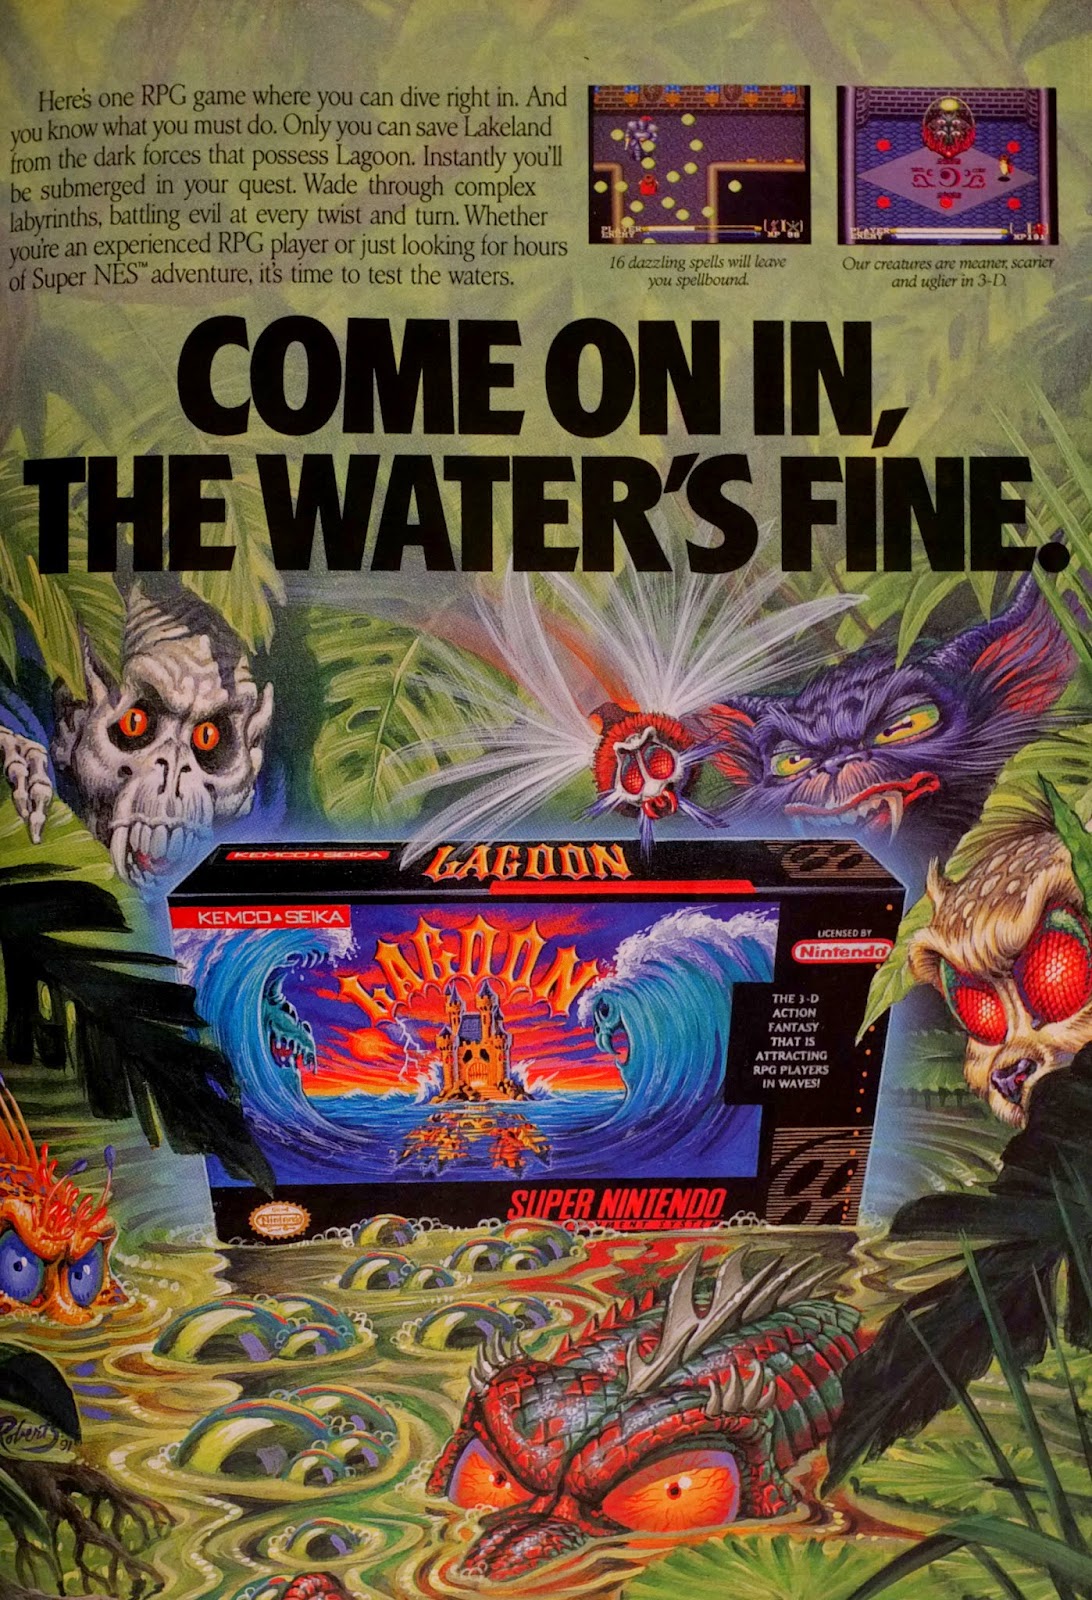 Lagoon for SNES advertisement